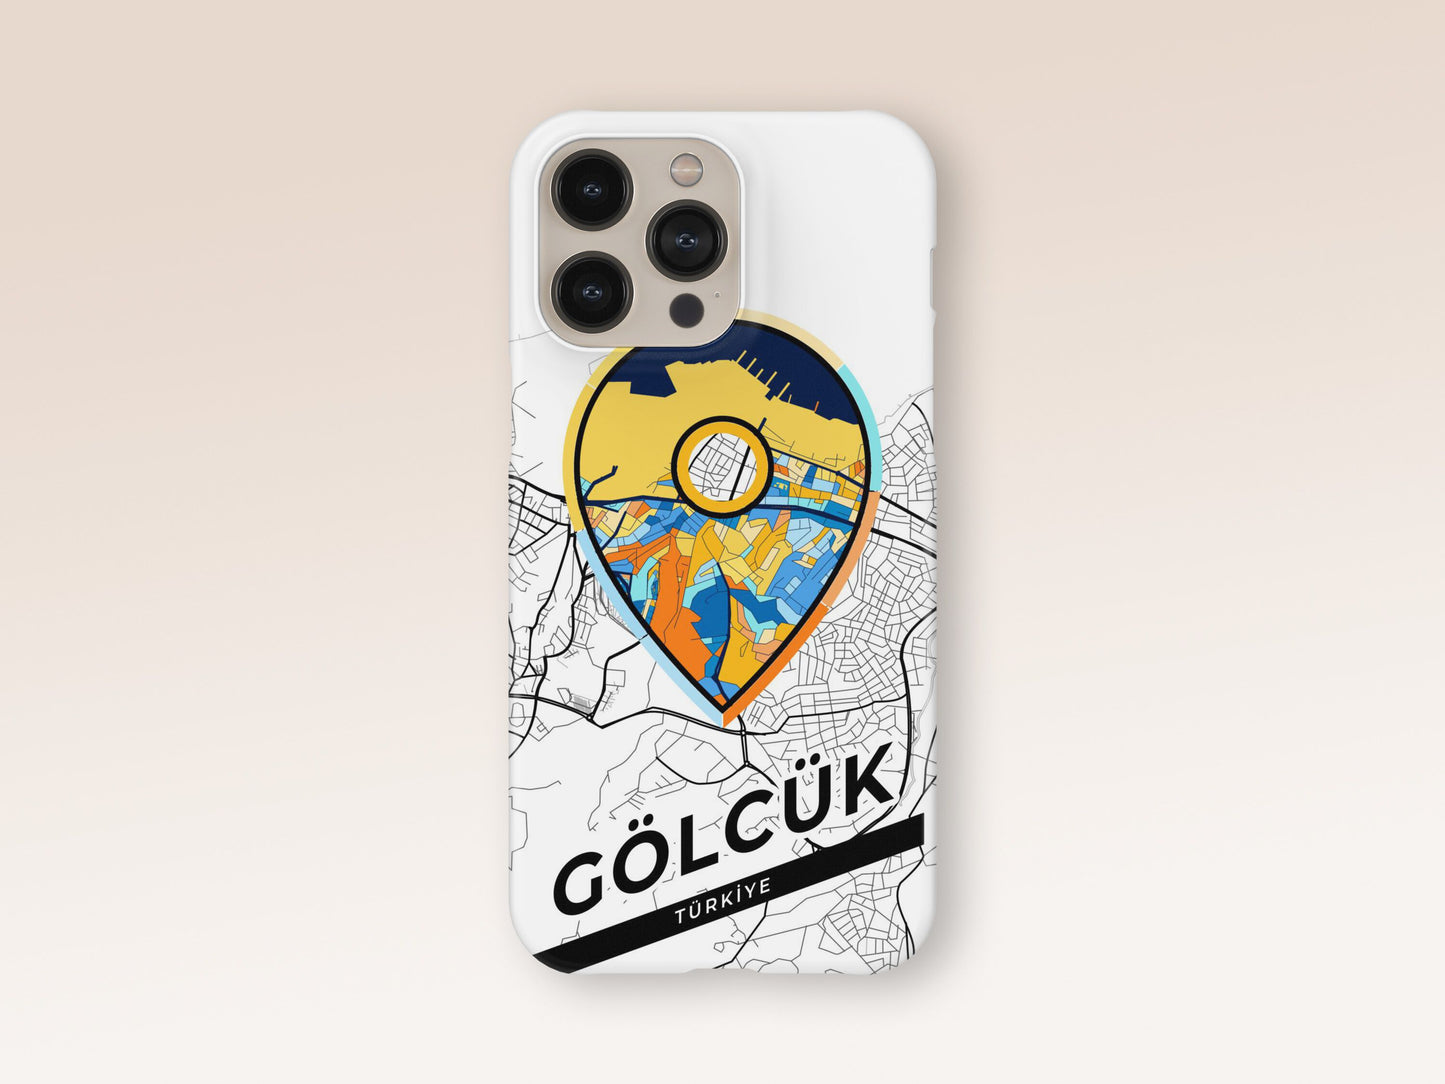 Gölcük Turkey slim phone case with colorful icon. Birthday, wedding or housewarming gift. Couple match cases. 1